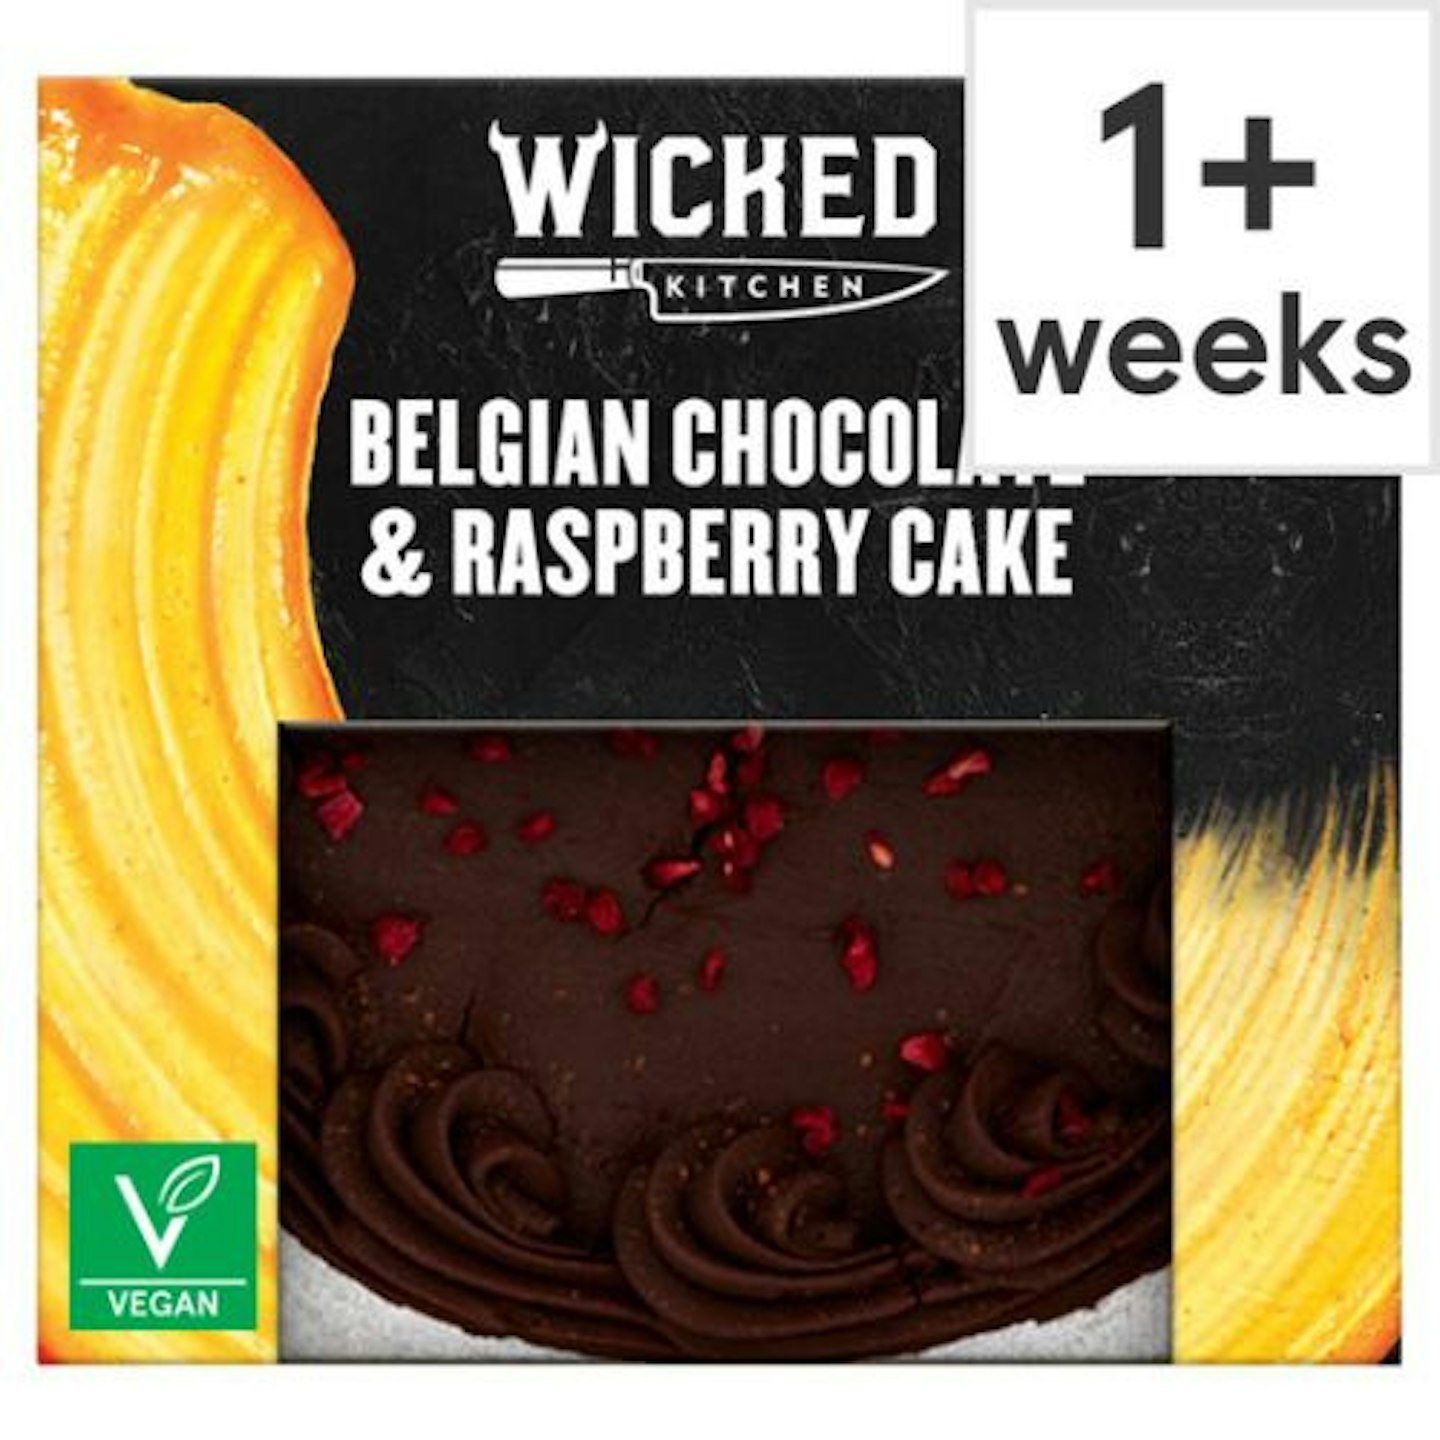 The best supermarket birthday cakes: Wicked Kitchen Belgian Chocolate & Raspberry Cake